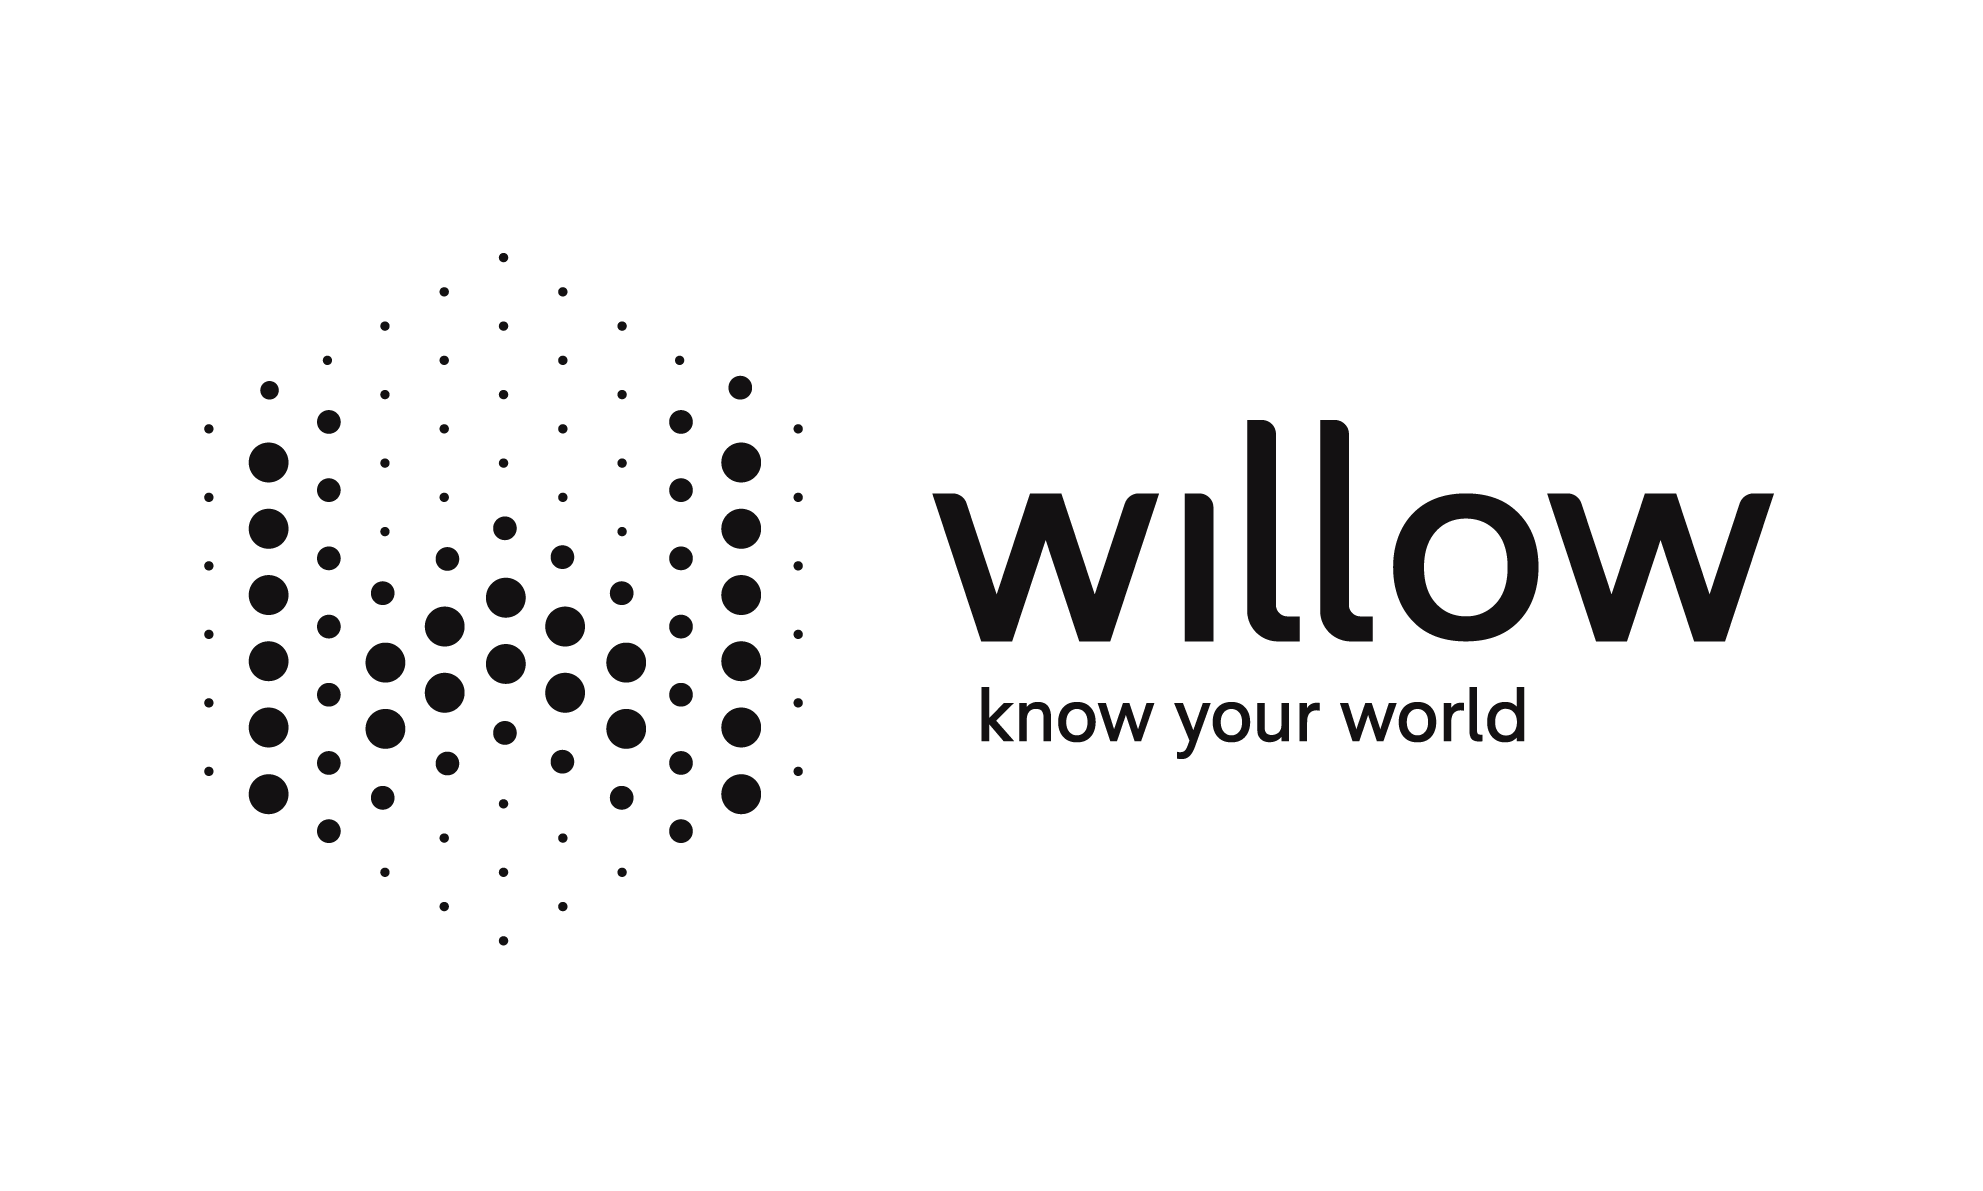 Go to Willow website